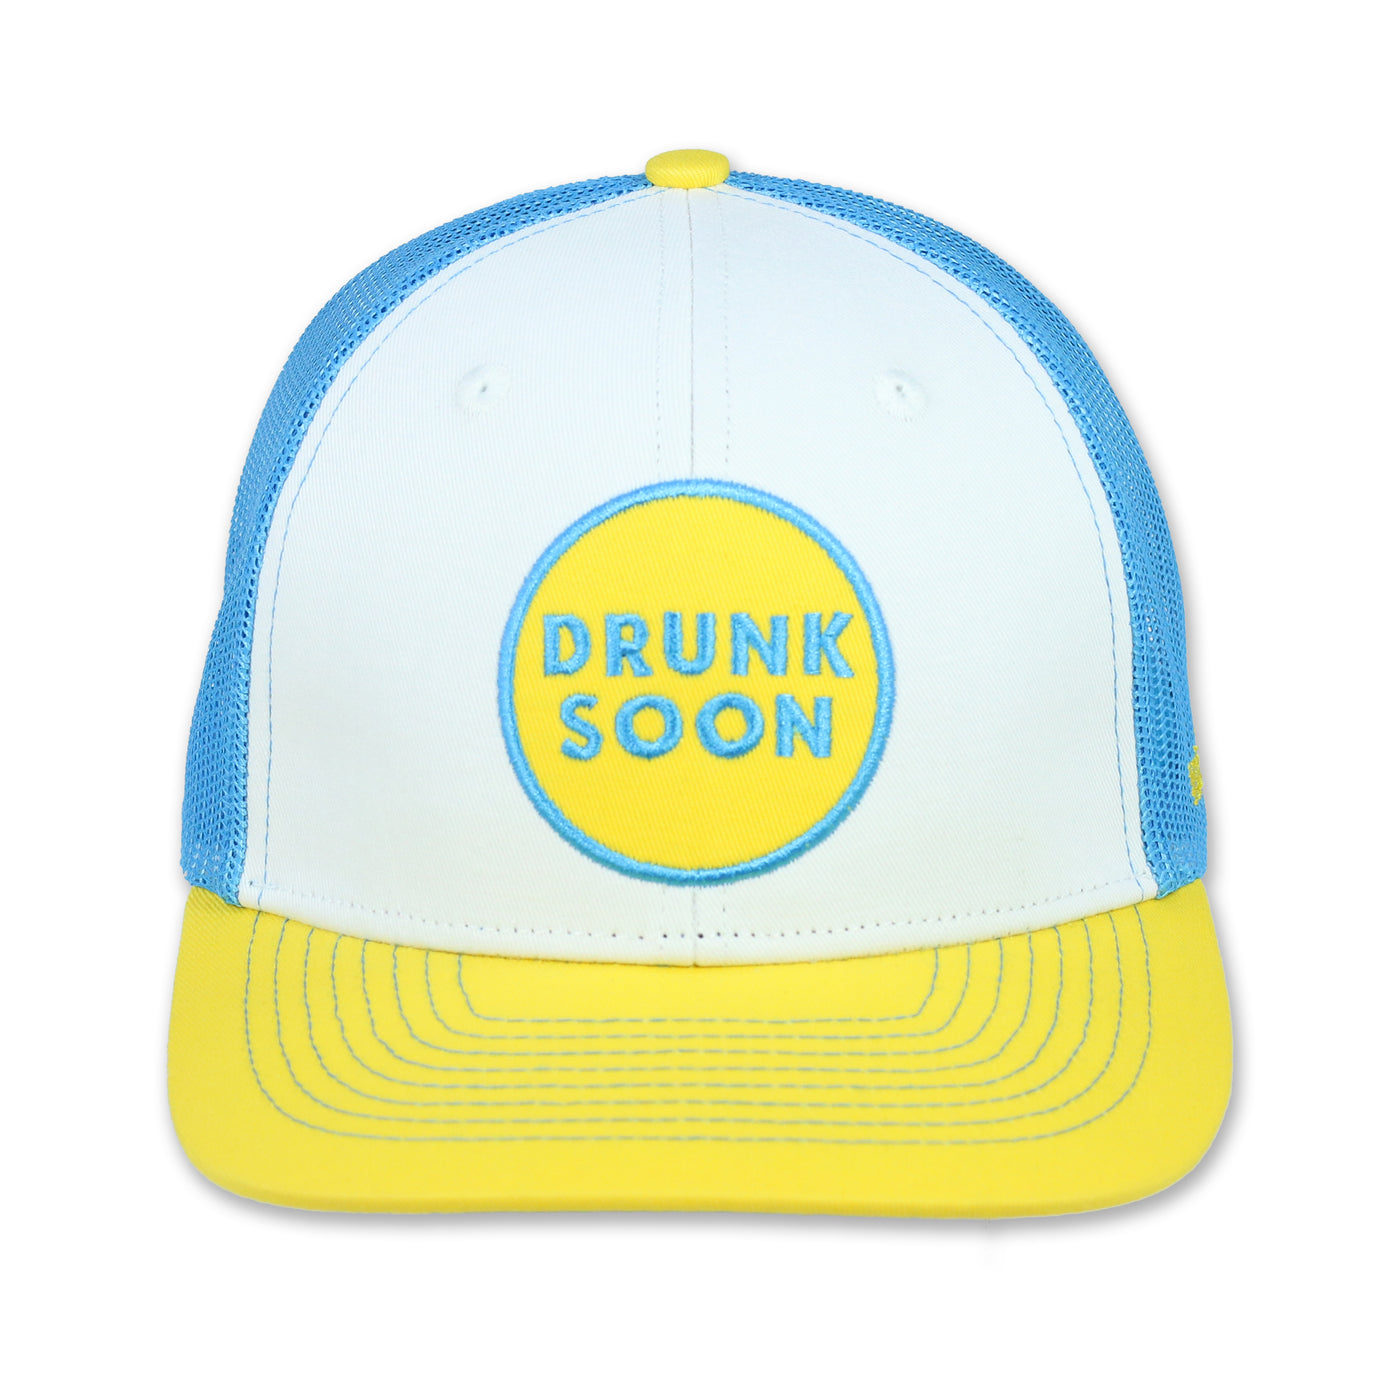 White, blue, yellow fun trucker hat